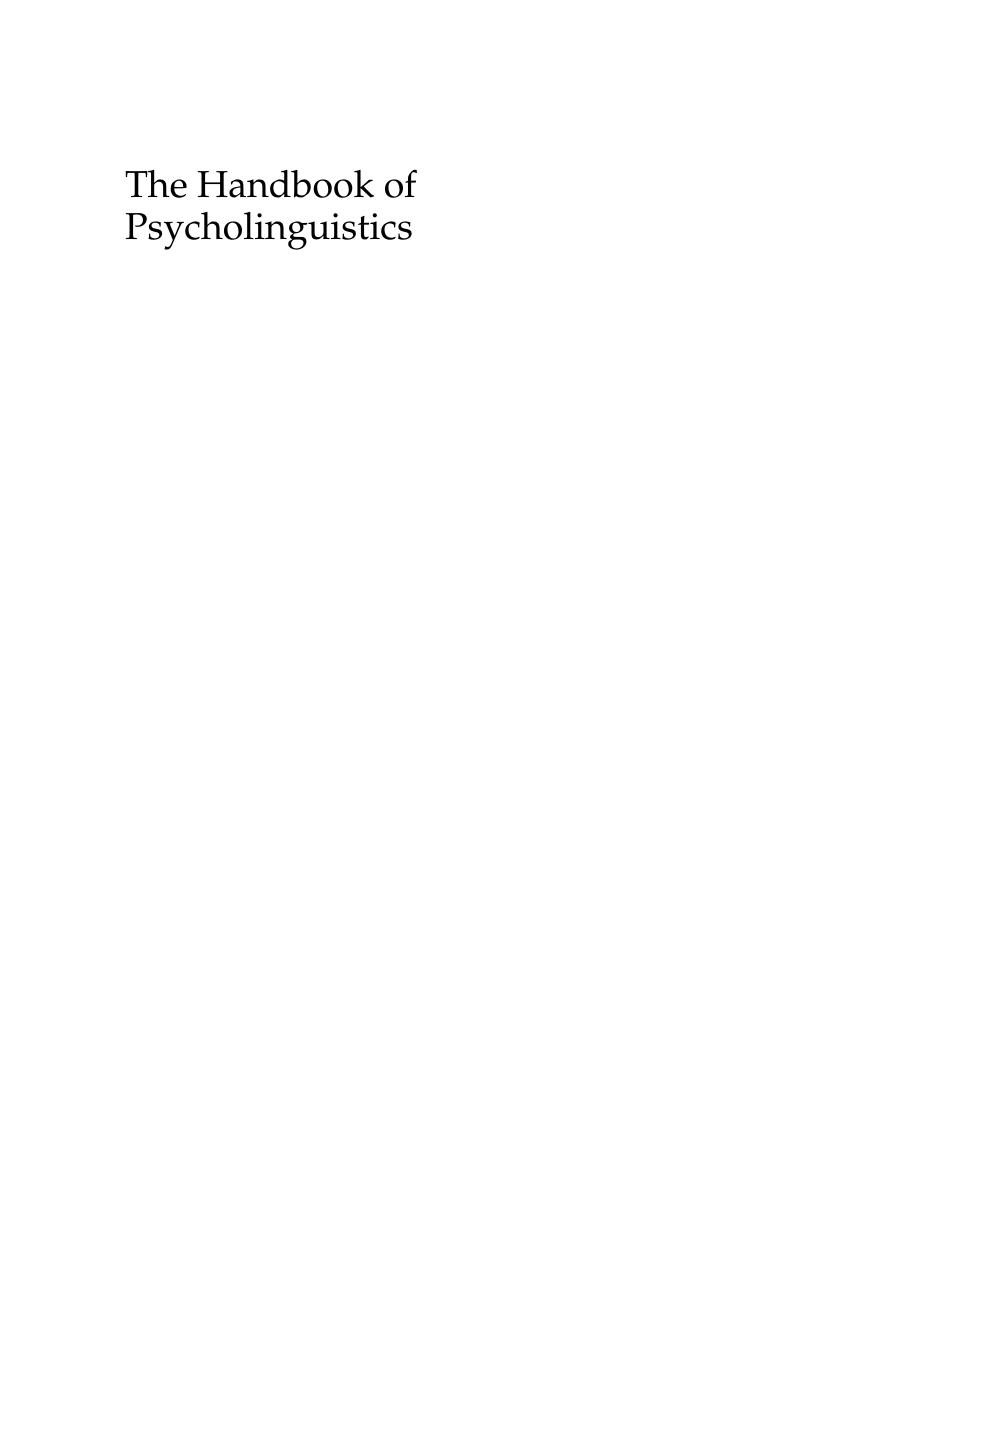 The Handbook of Psycholinguistics 2015